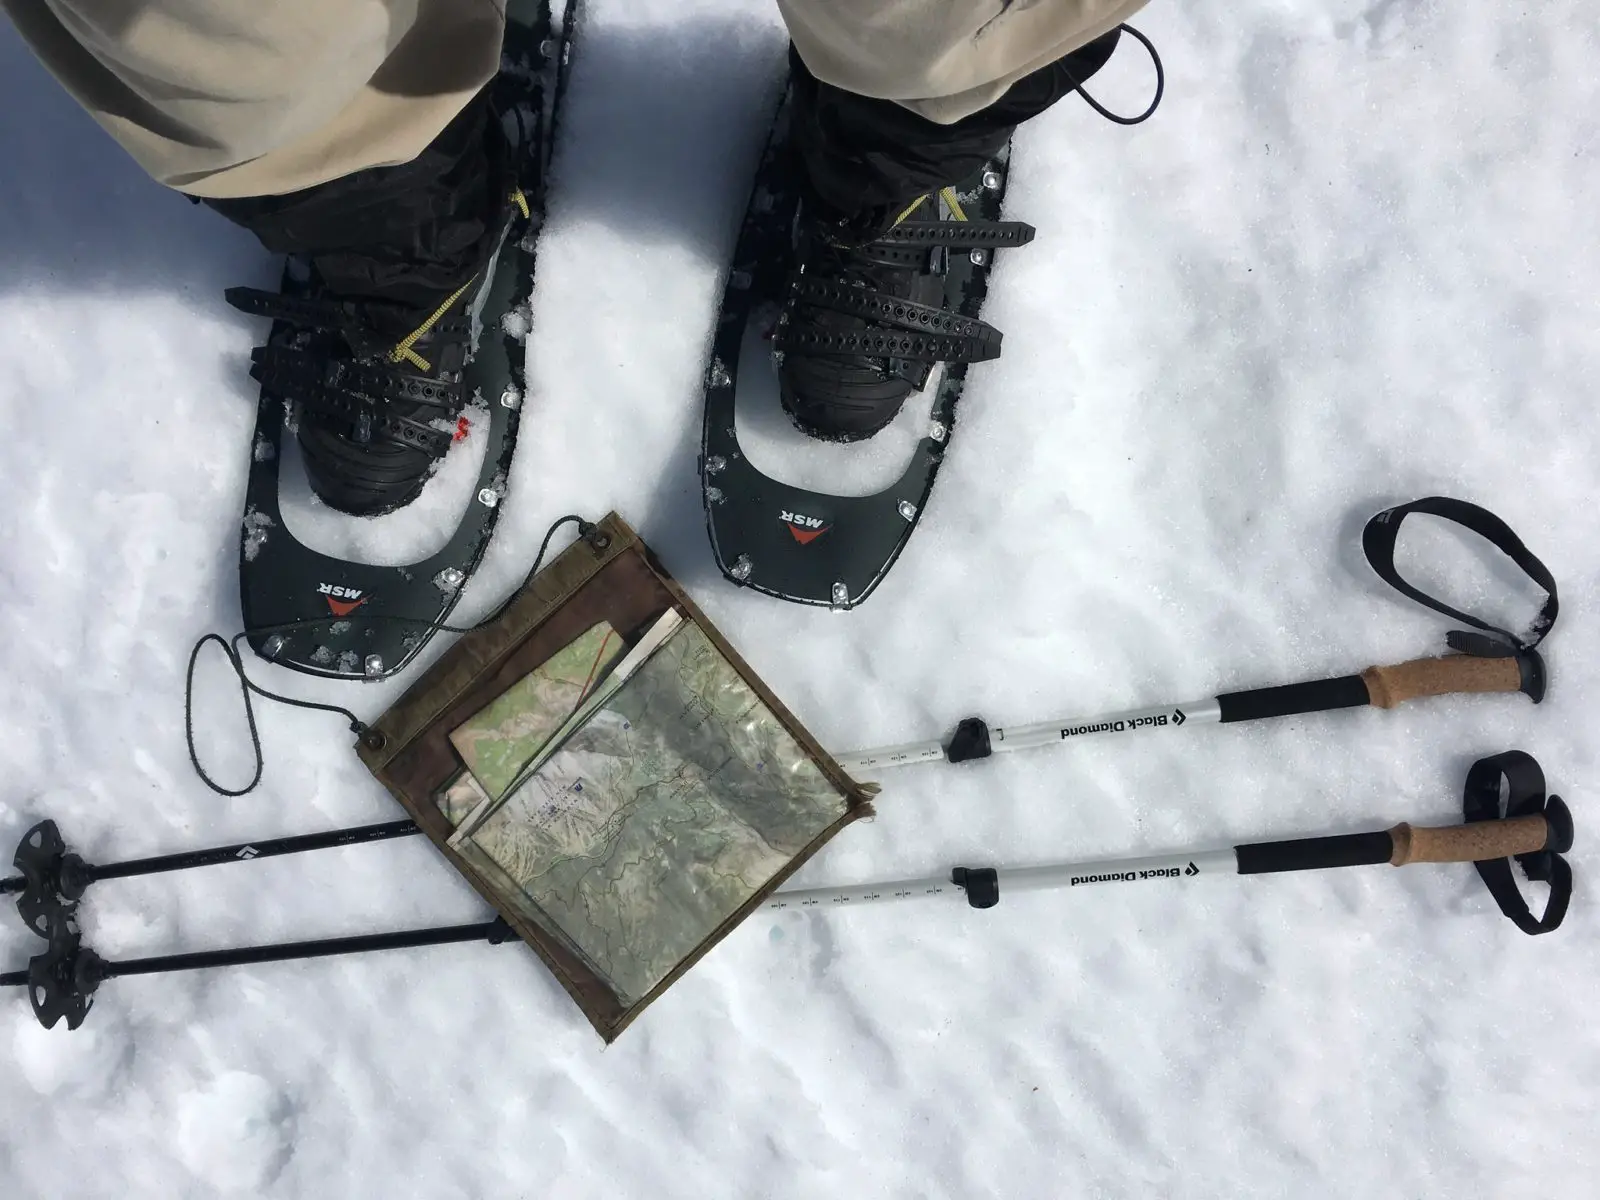 Snowshoes, trekking poles, and a map - Photo: Rupert Essinger